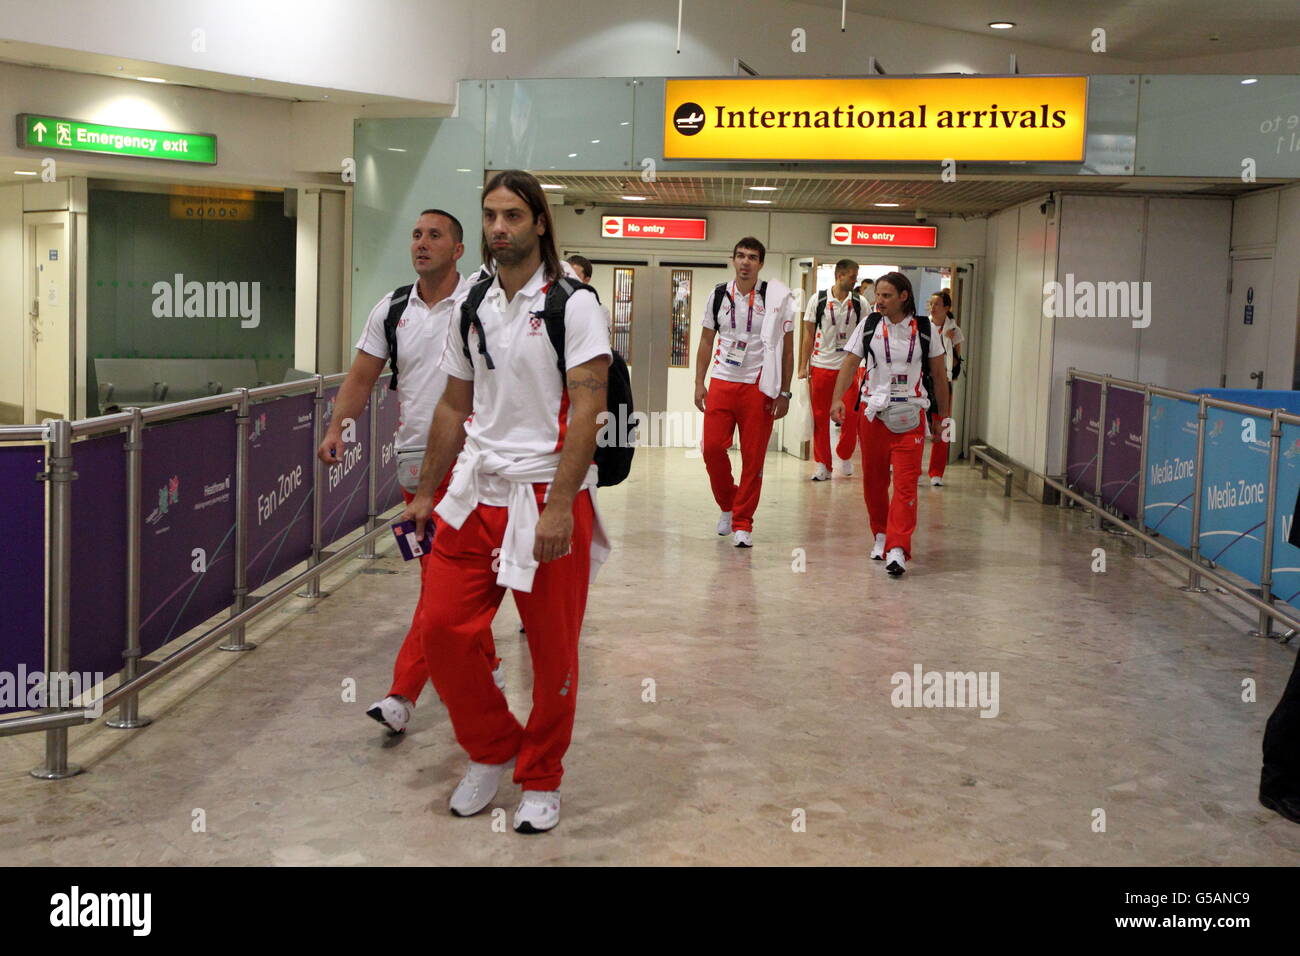 Olympics - London 2012 - Croatian Olympic Team Arrive at Heathrow Airport Stock Photo